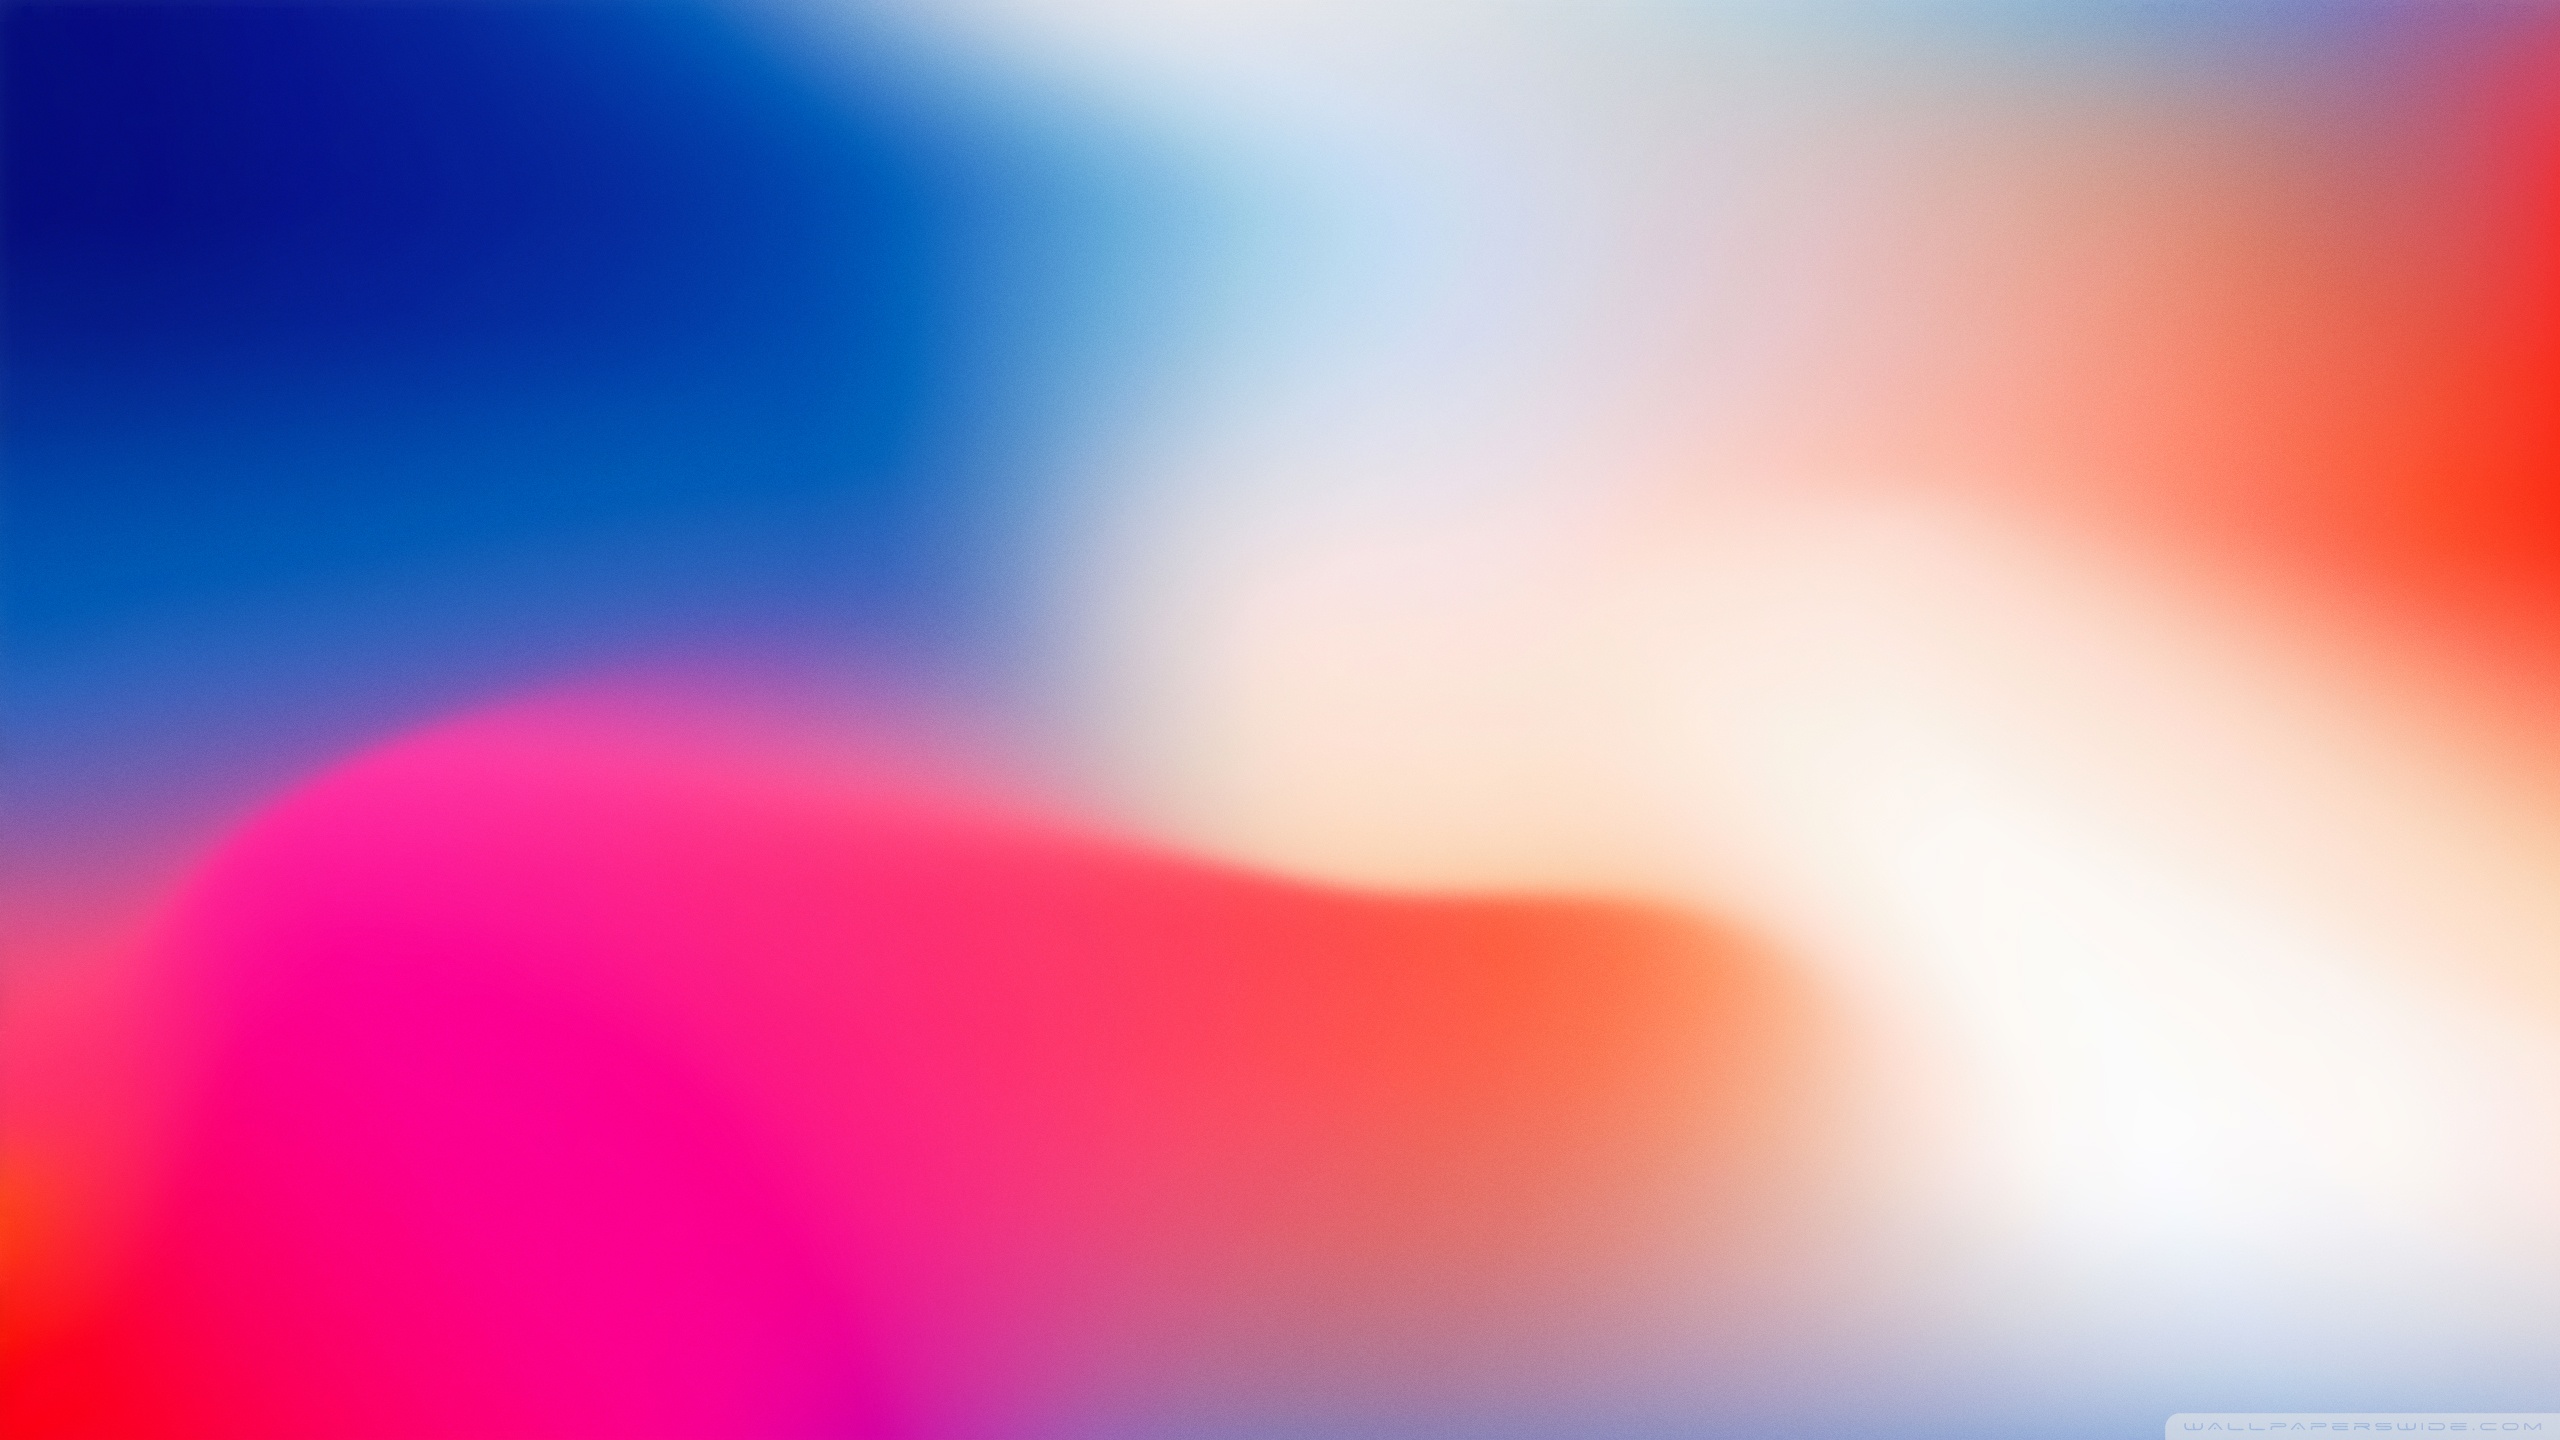 Iphone X Wallpaper For Mac Os Ultra Hd Desktop Background